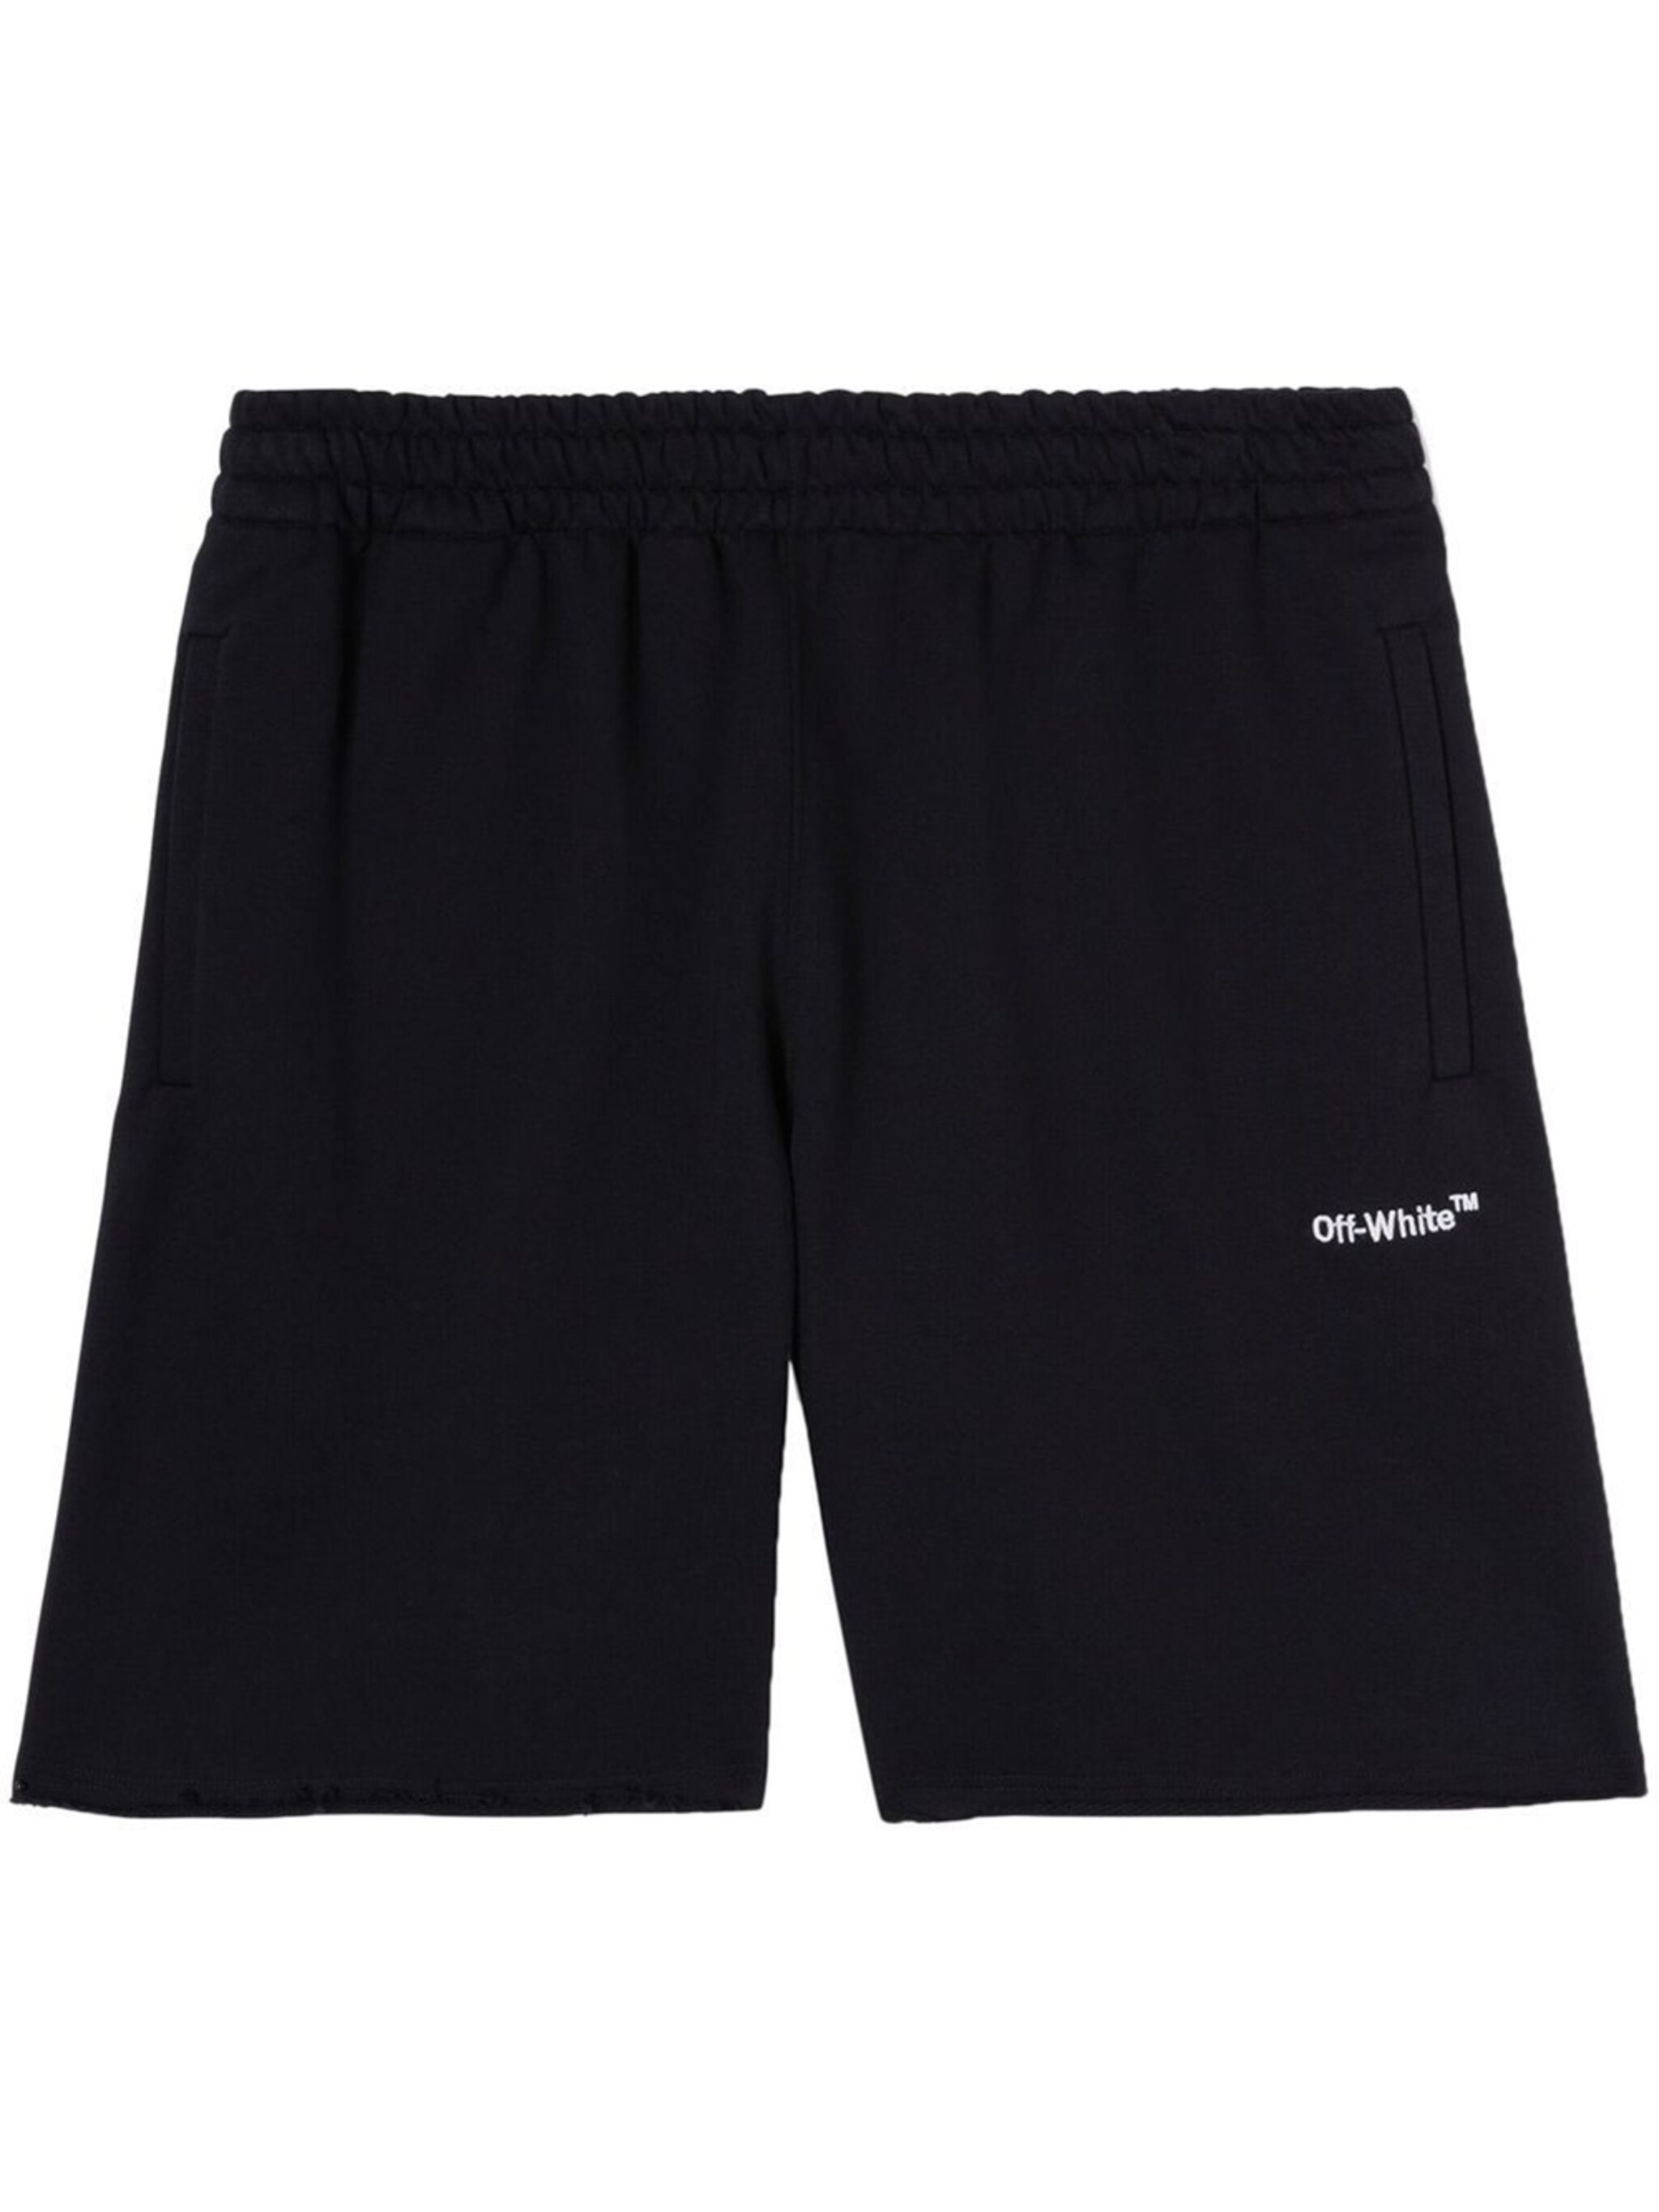 Off-White logo-waistband shorts - Black